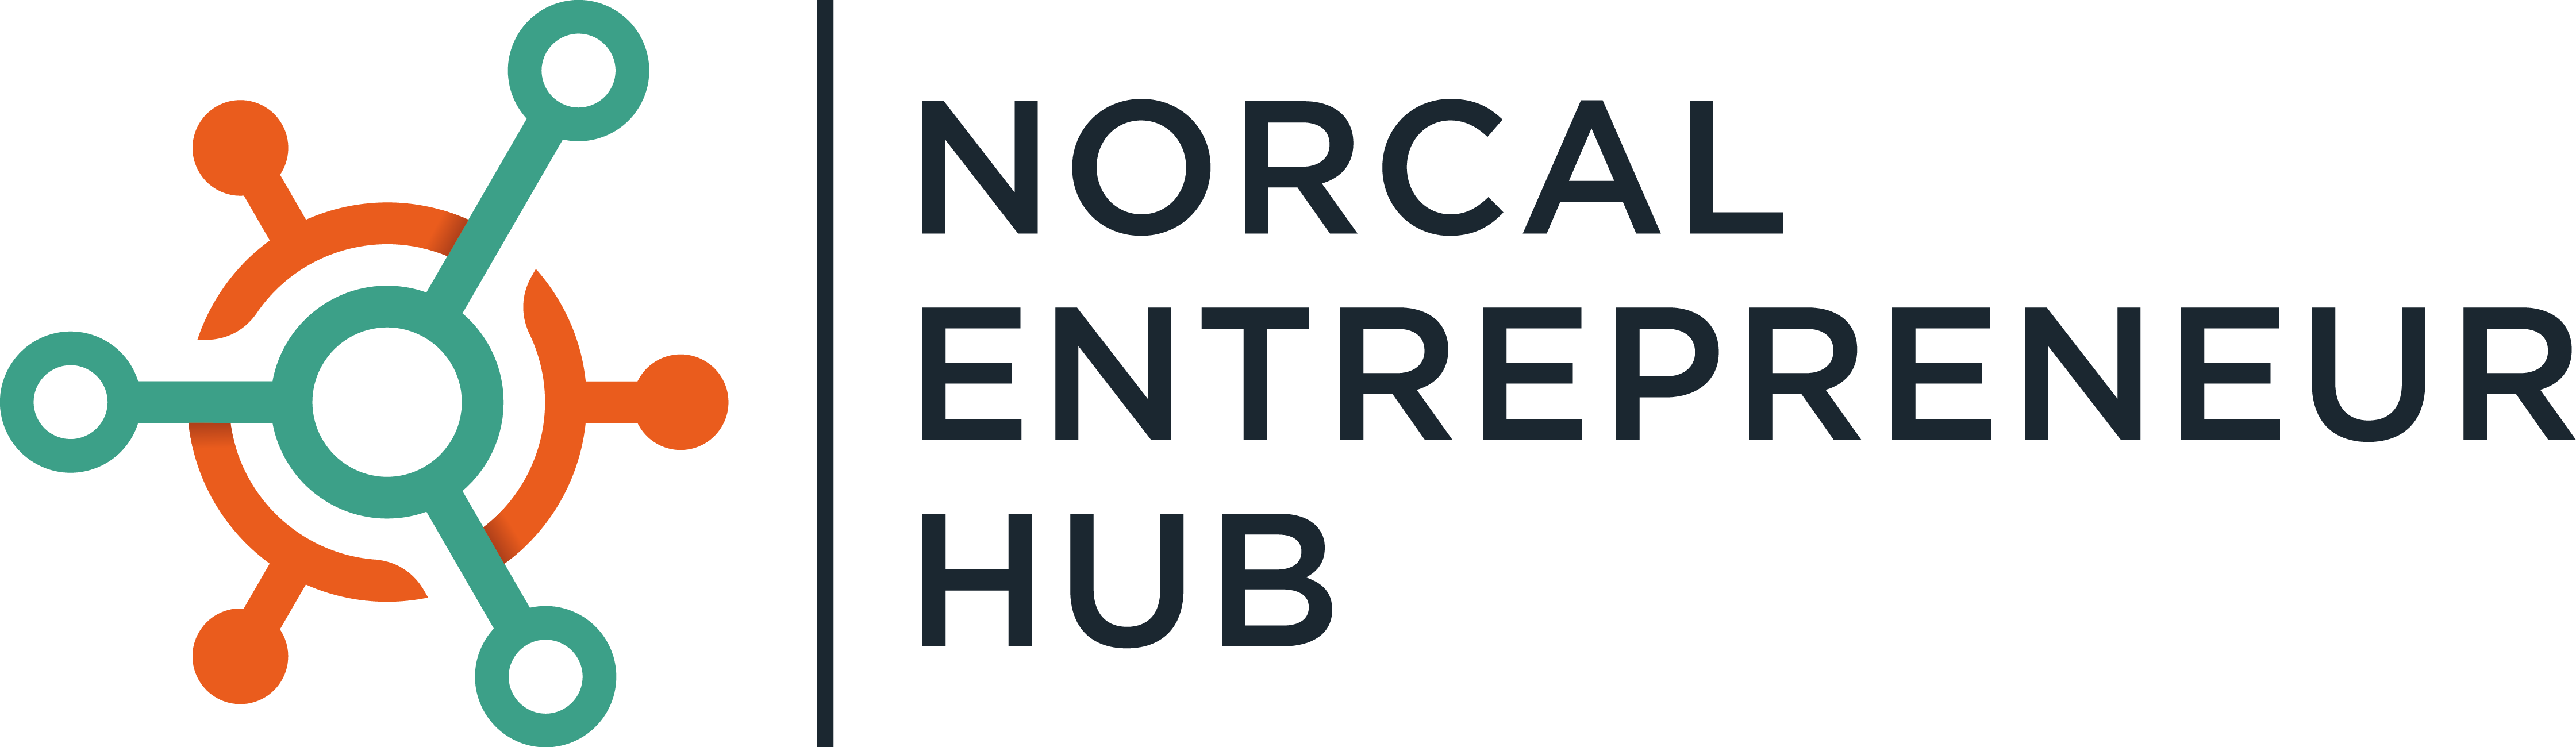 norcal-entrepreneur-hub.png